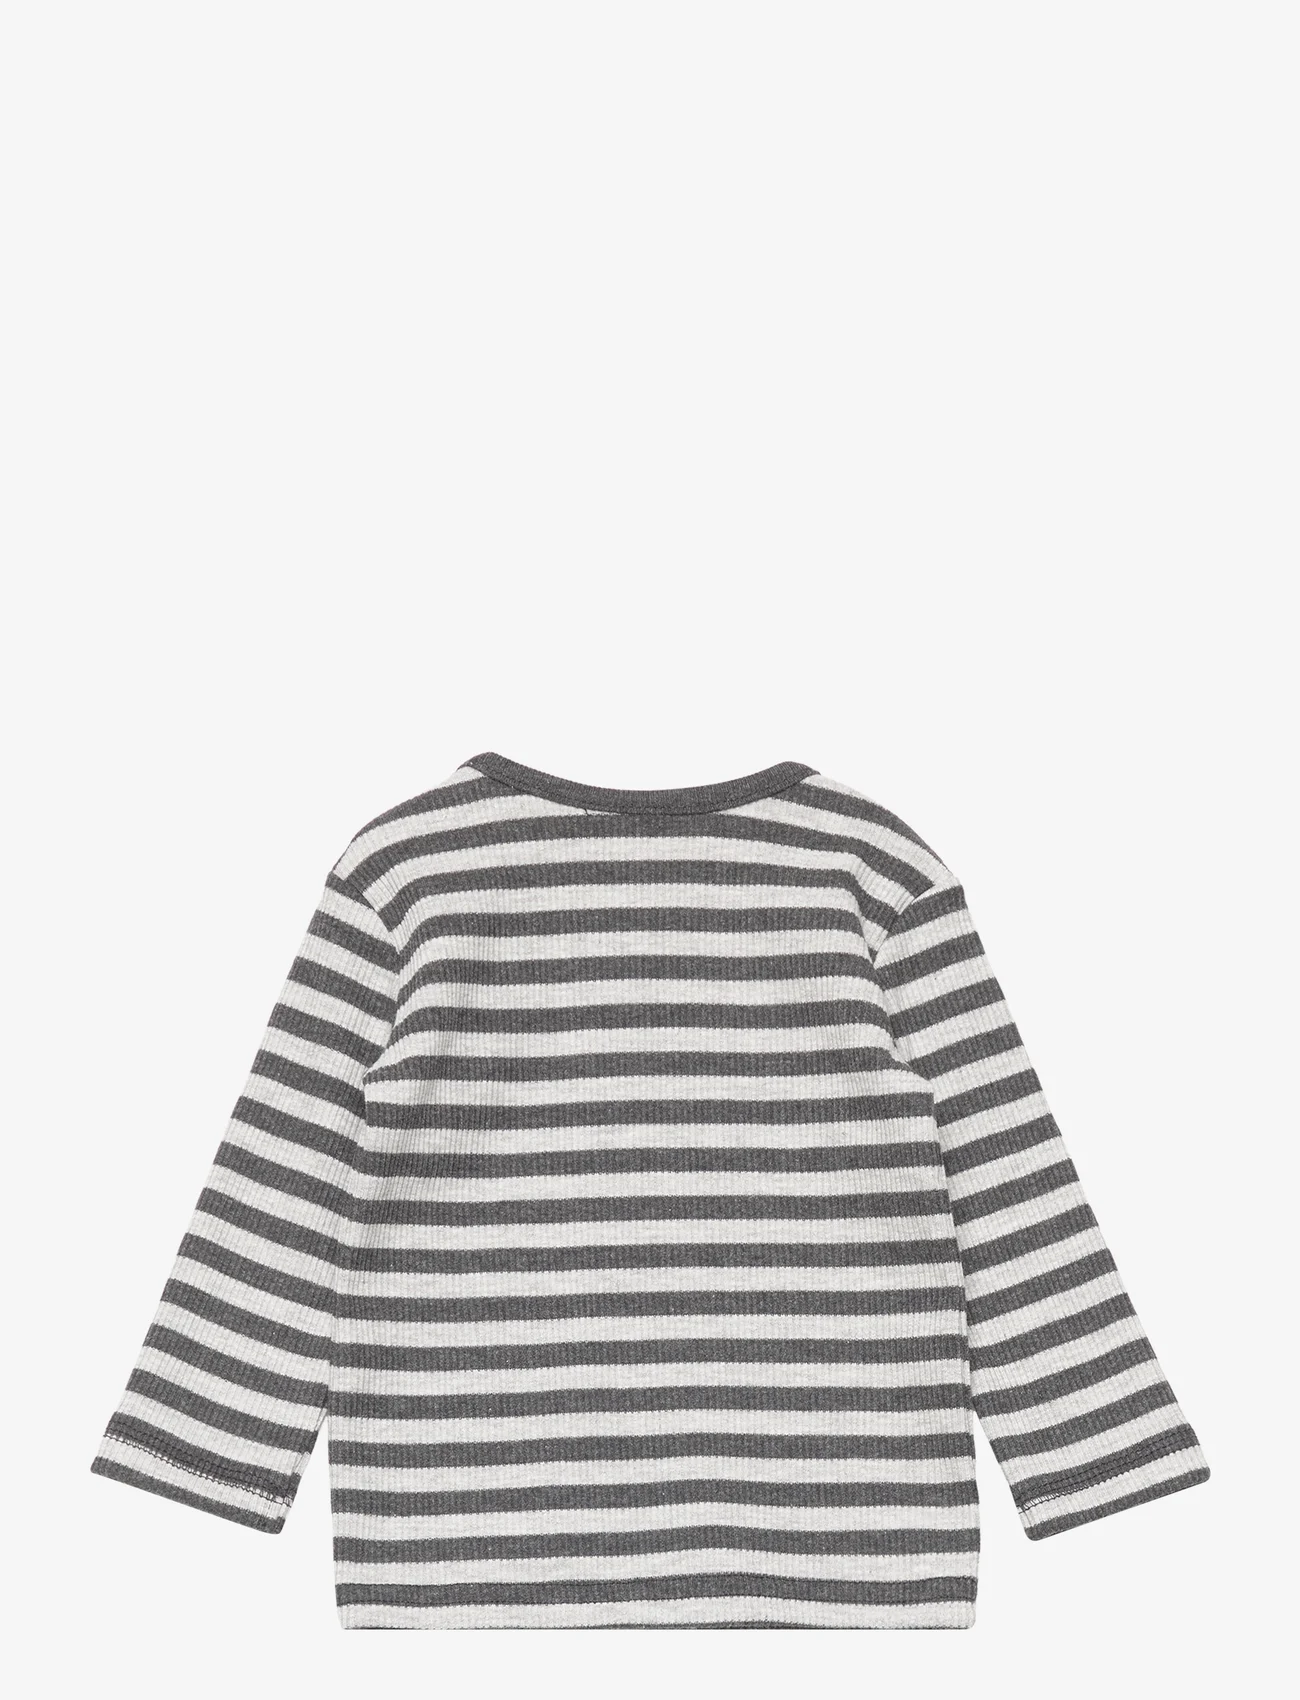 Noa Noa miniature - T-shirt - marškinėliai ilgomis rankovėmis - light/dark grey melange - 1